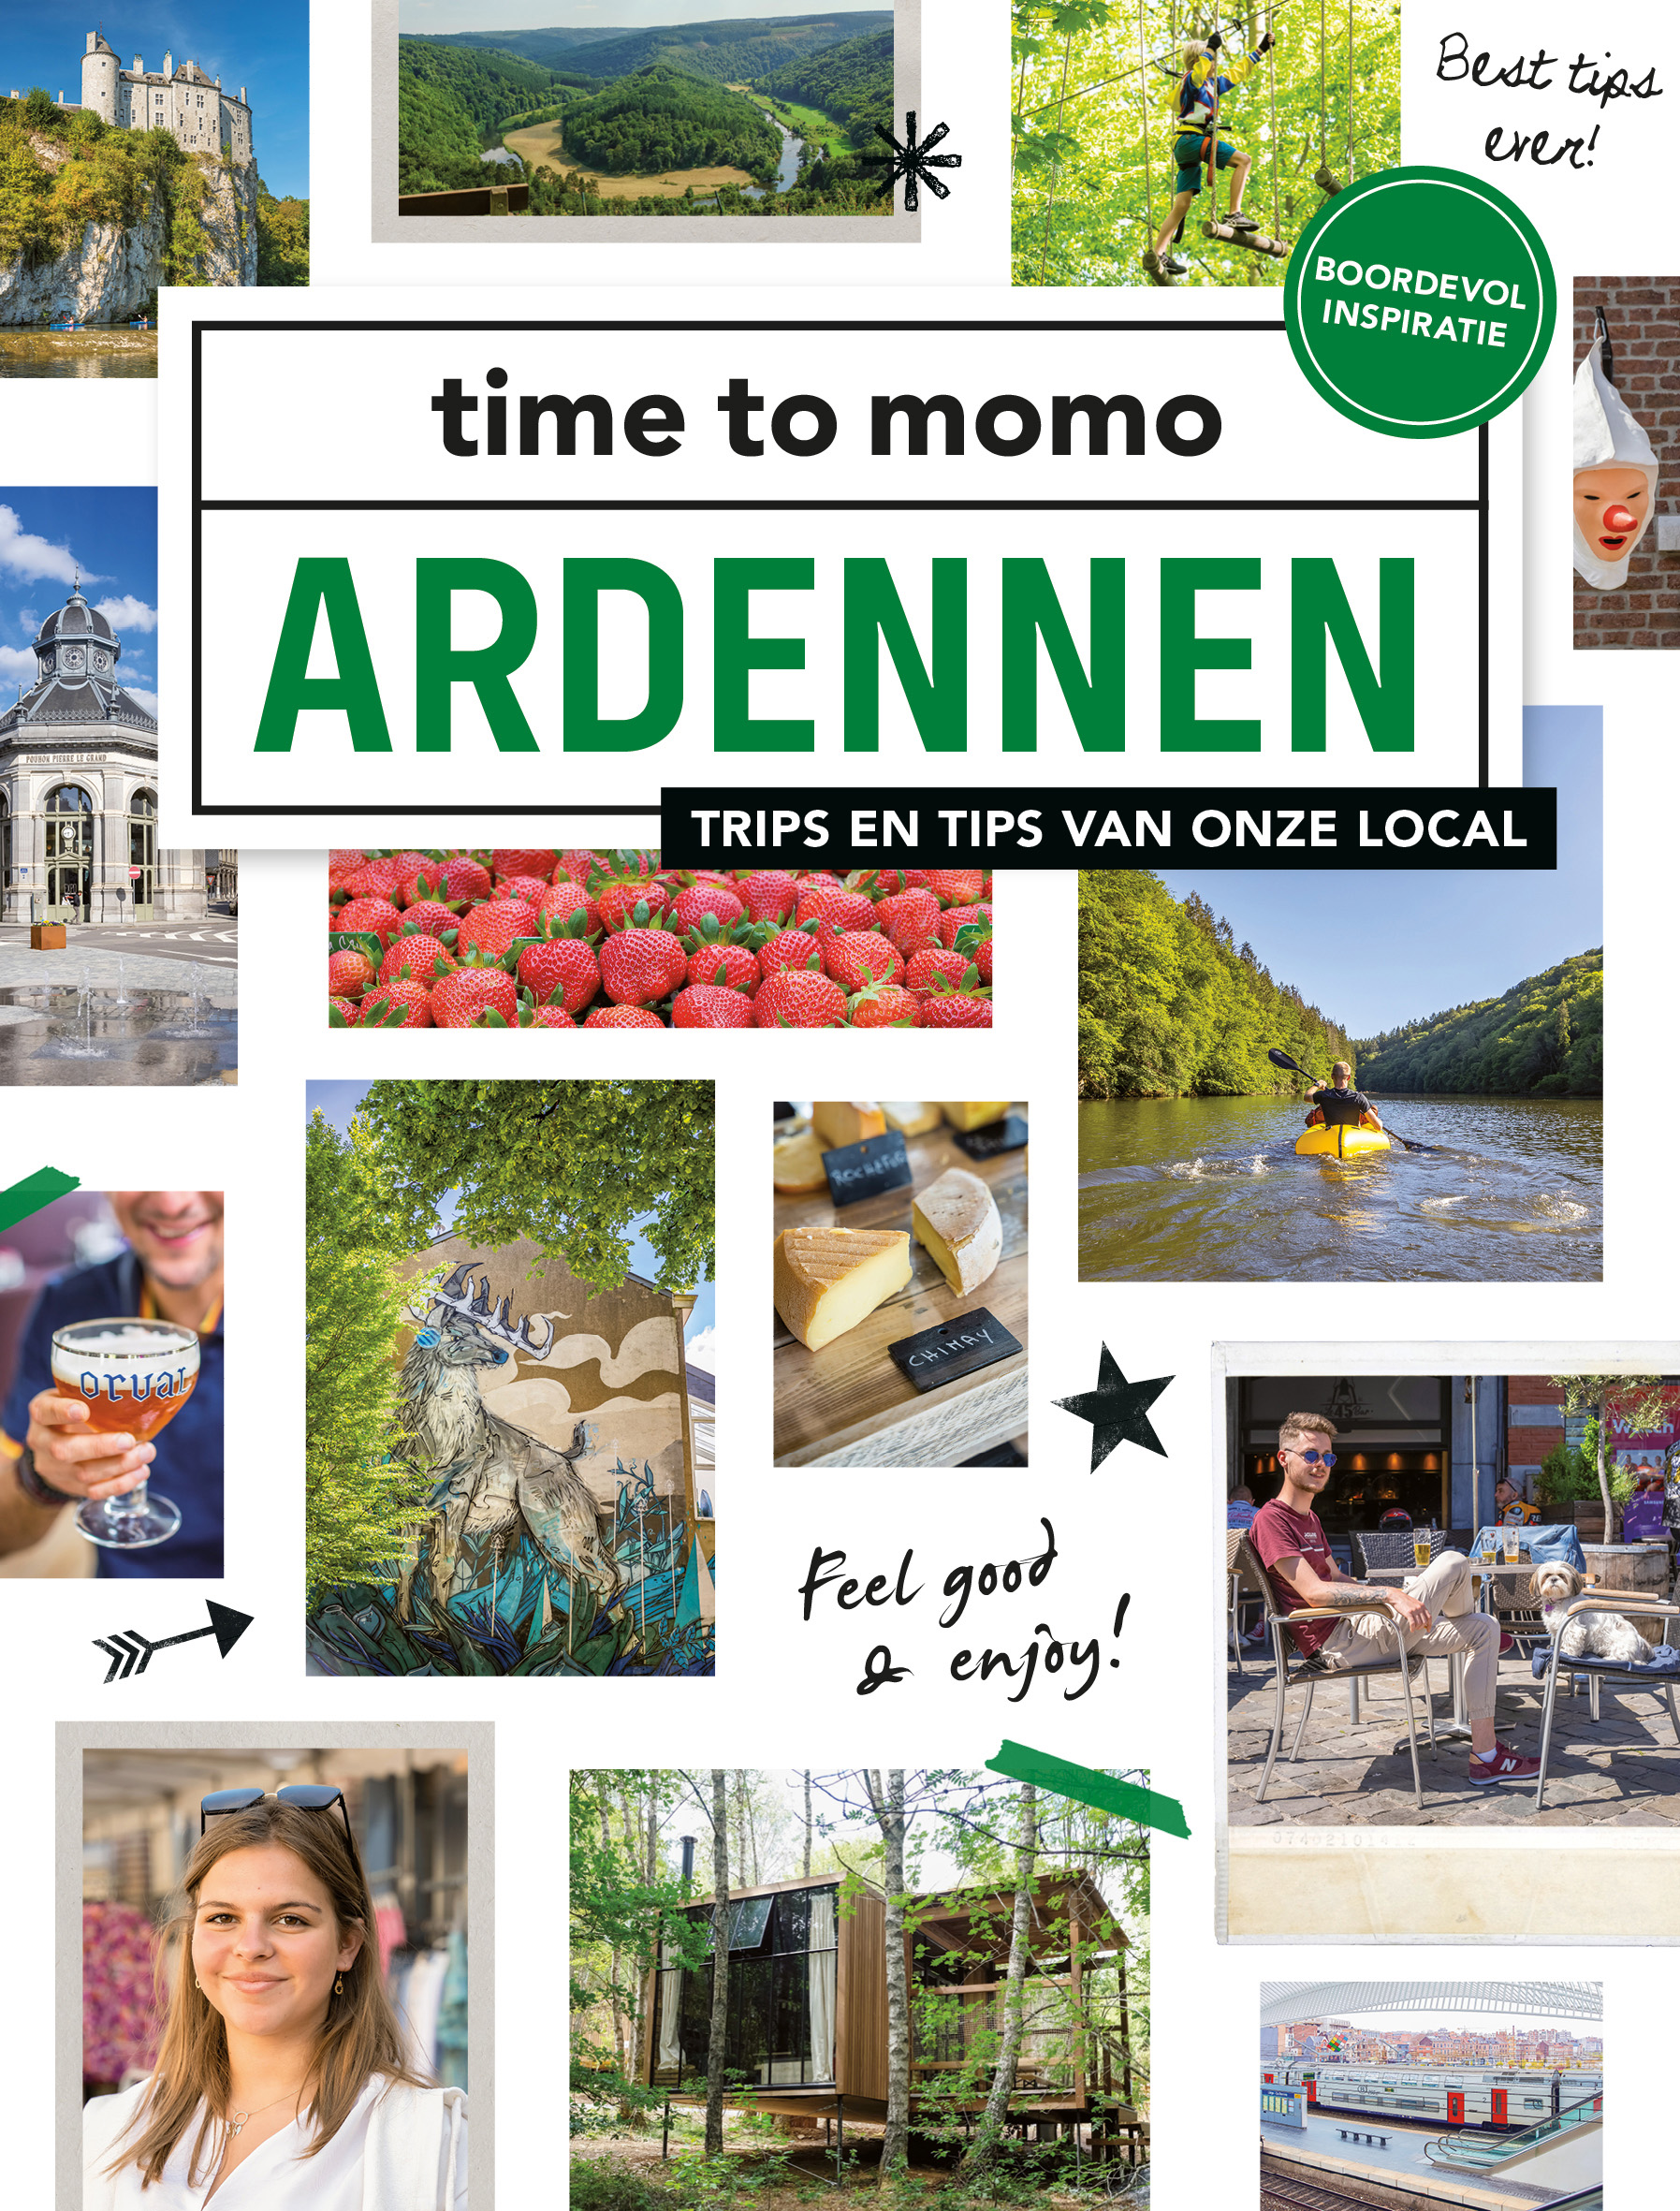 Ardennen - Time to momo